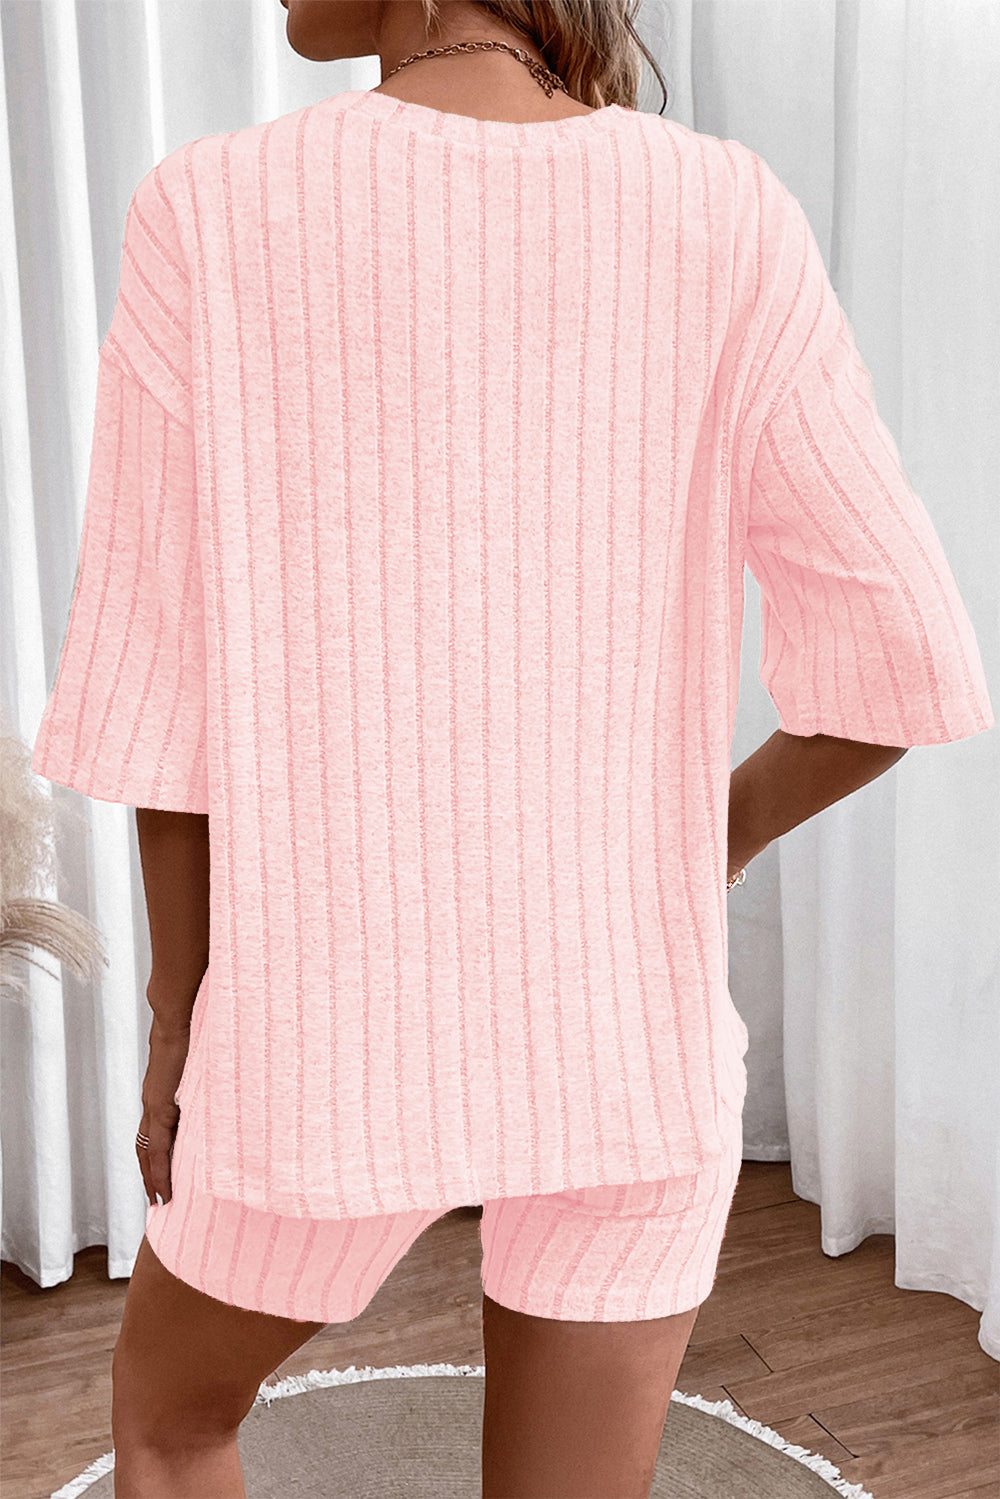 TEEK - Blush Pink Ribbed Top and Shorts Set SET TEEK Trend   